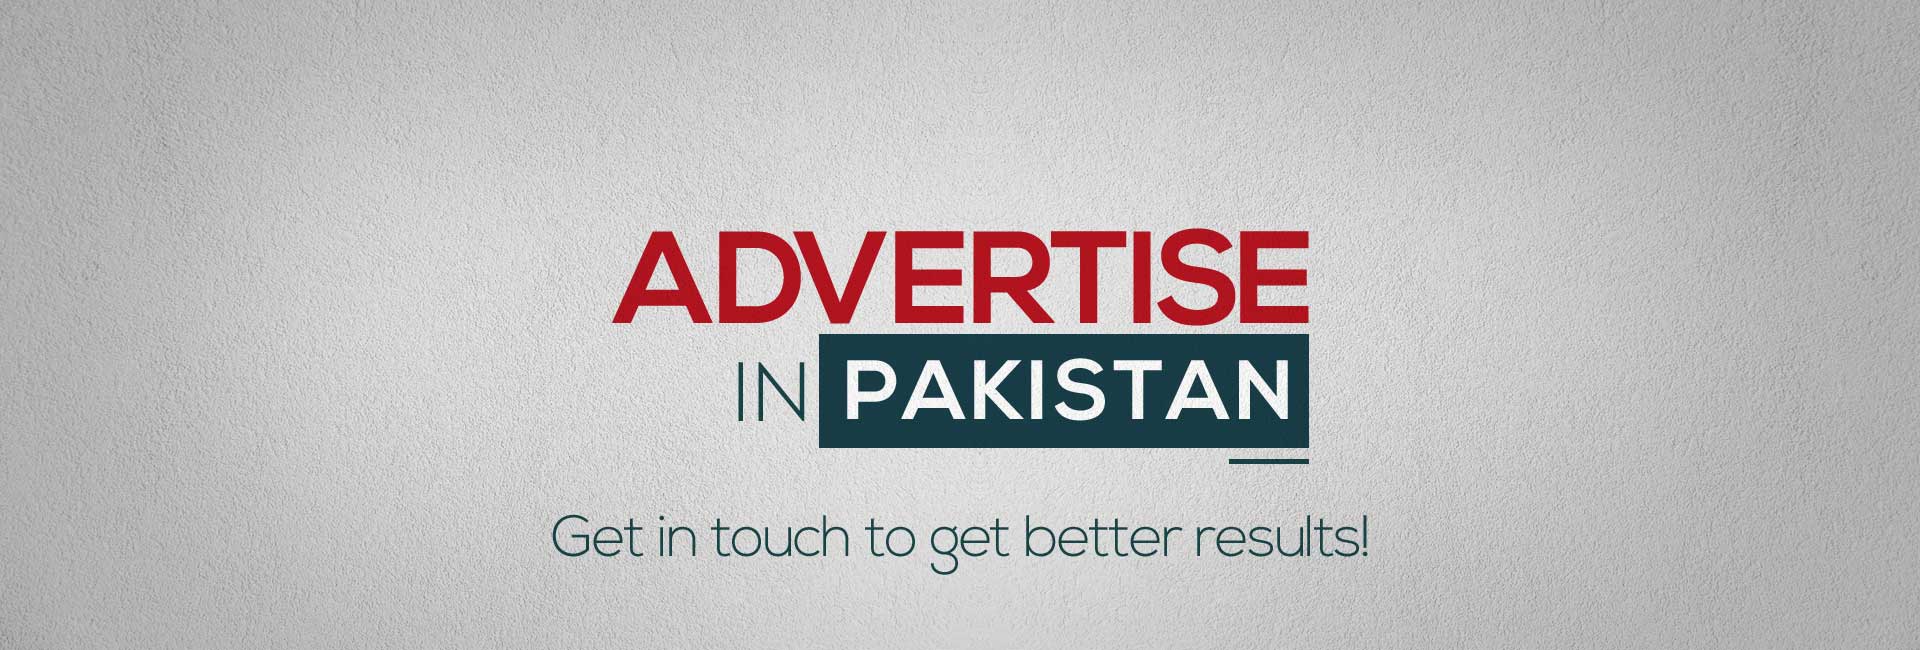 Advertise-in-Pakistan